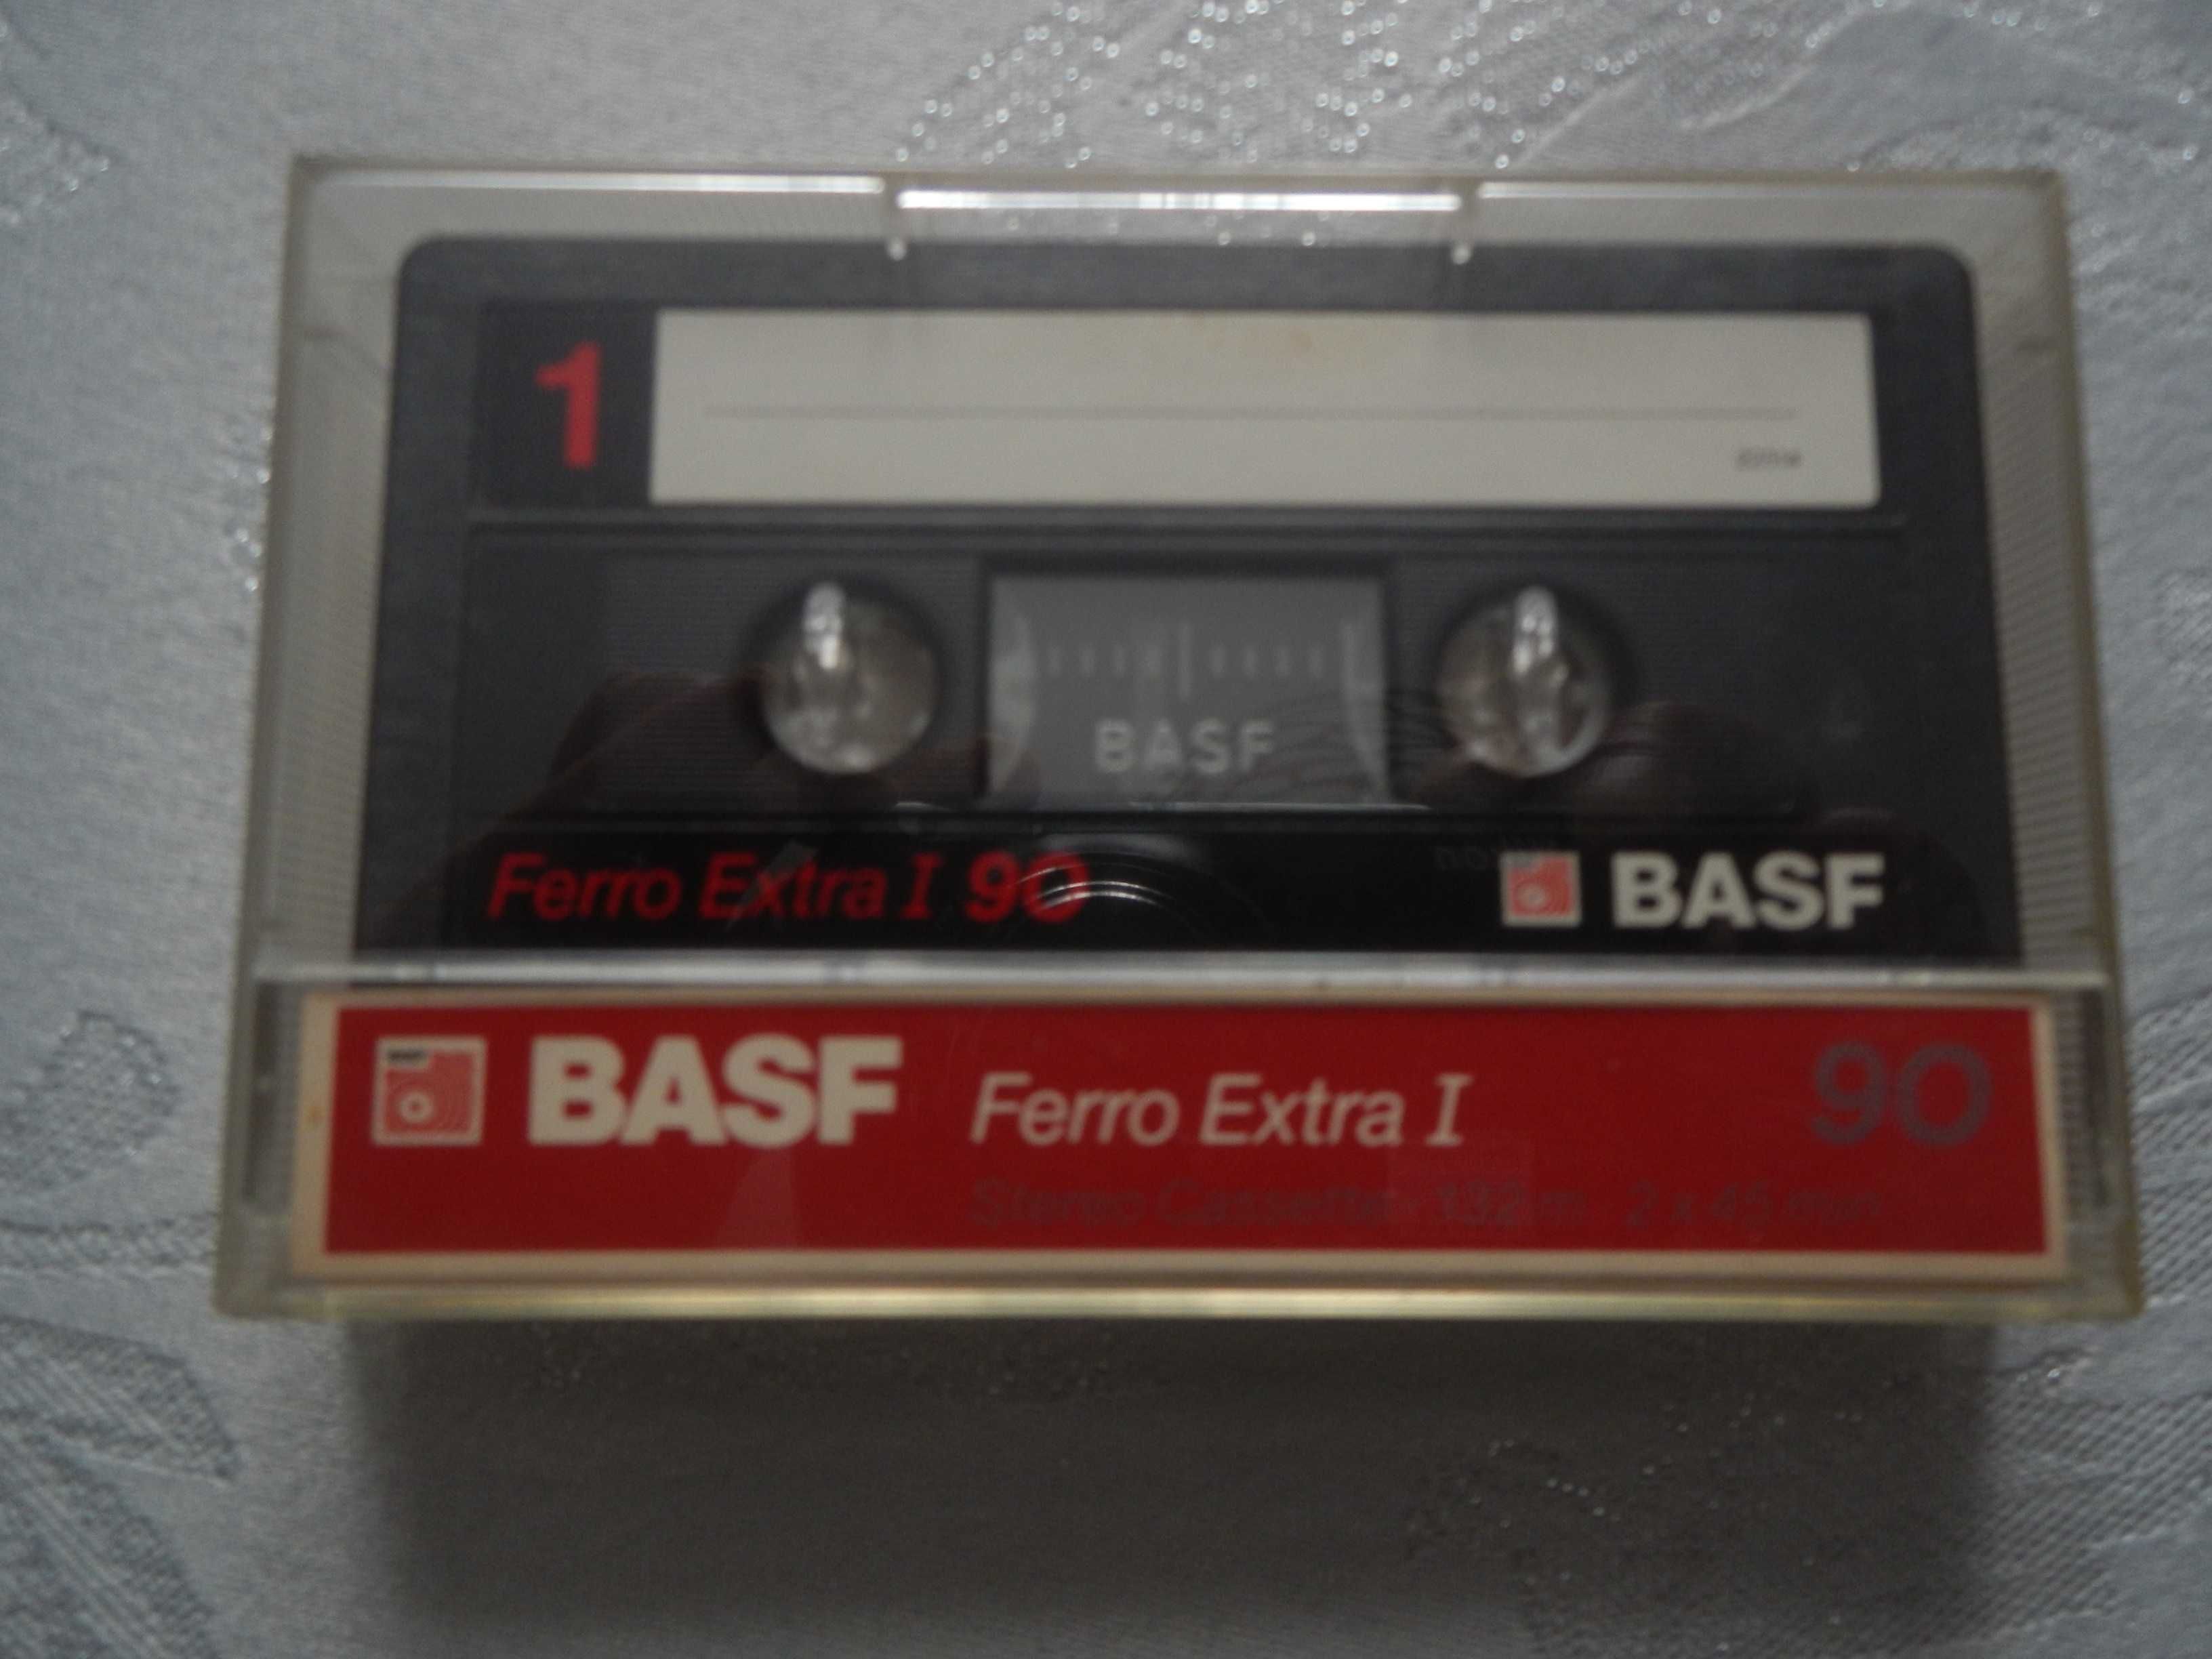 Kaseta audio magnetofonowa BASF Ferro Extra I 90